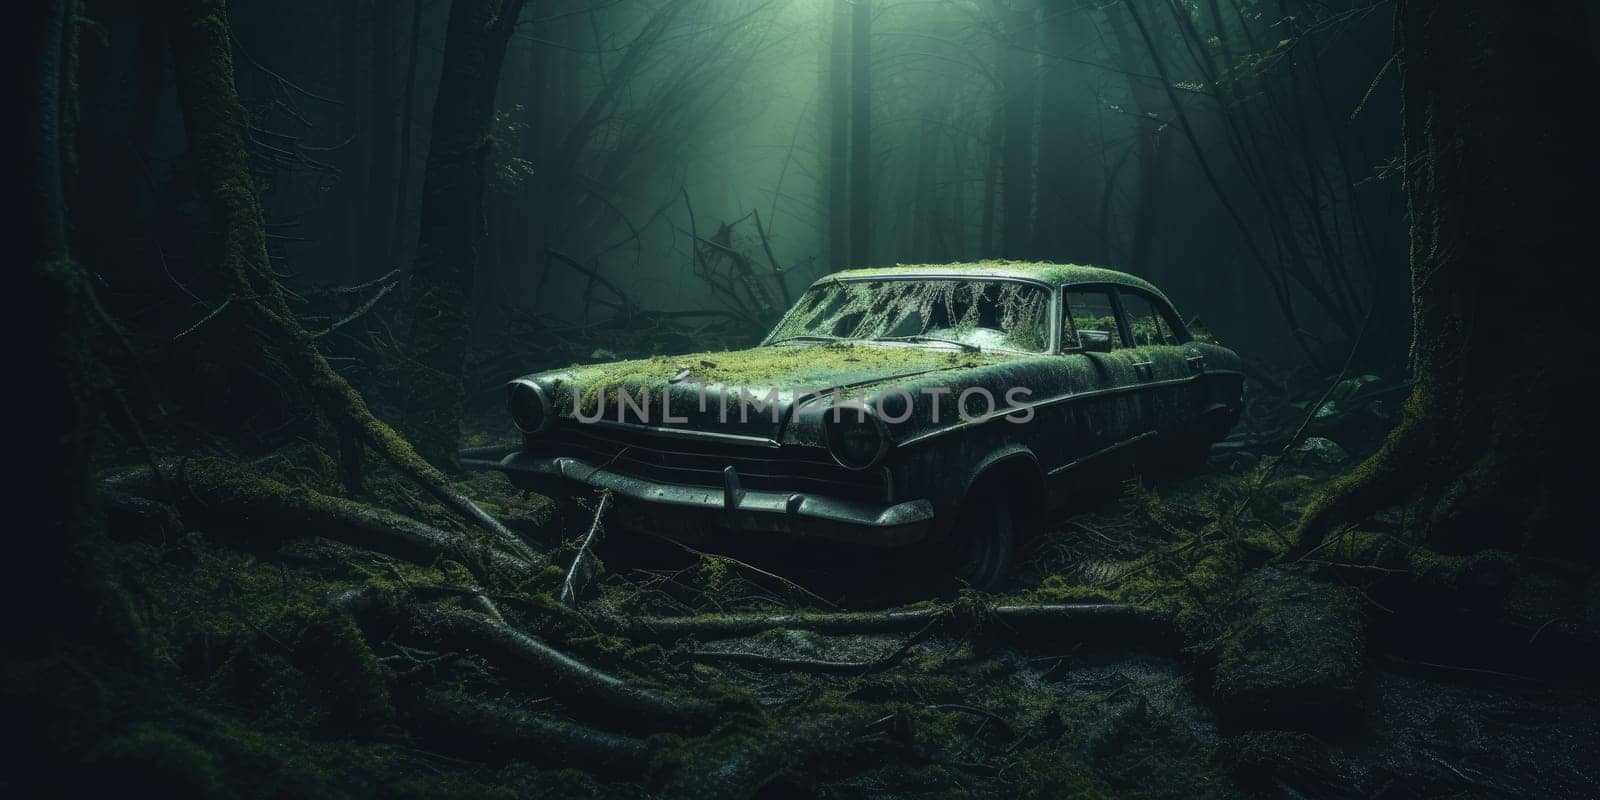 Abondoned car in a dark mystic forest